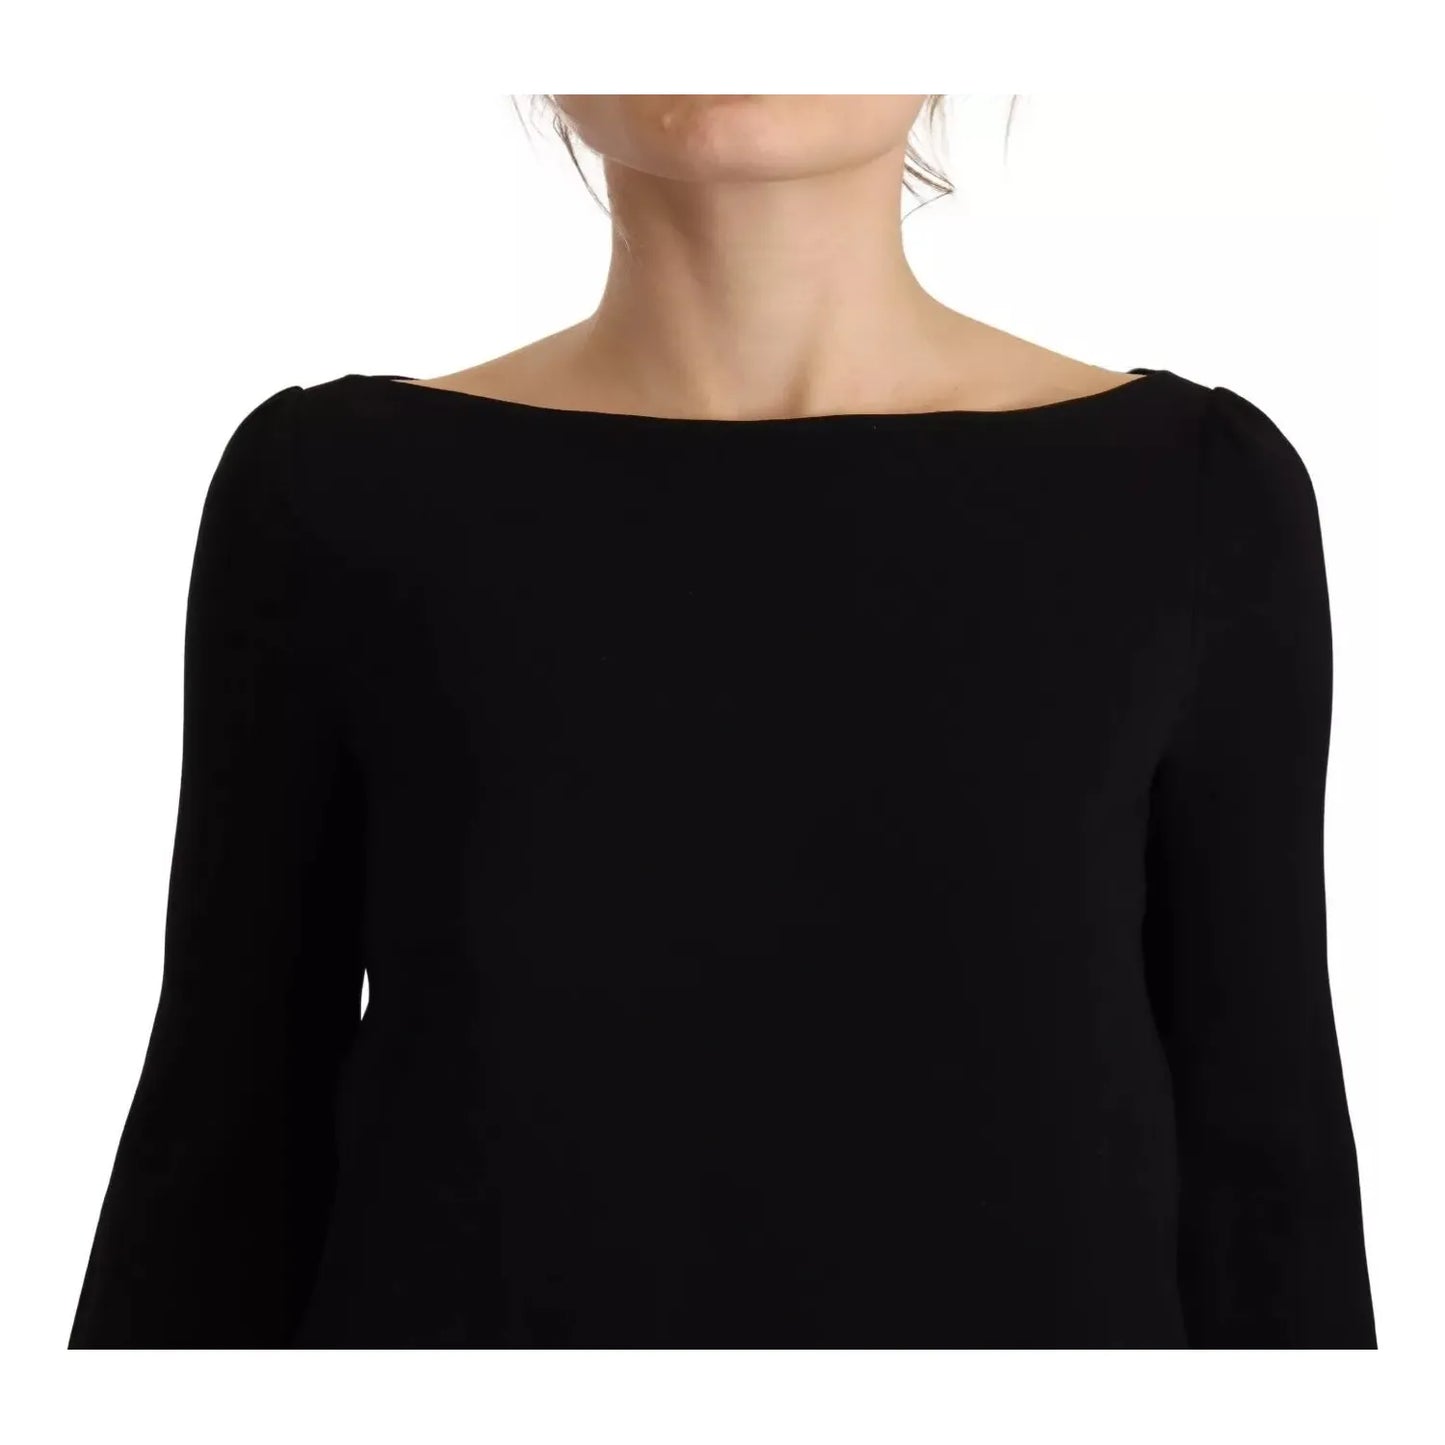 Dsquared² Black Long Sleeves Side Slit Floor Length Dress black-long-sleeves-side-slit-floor-length-dress